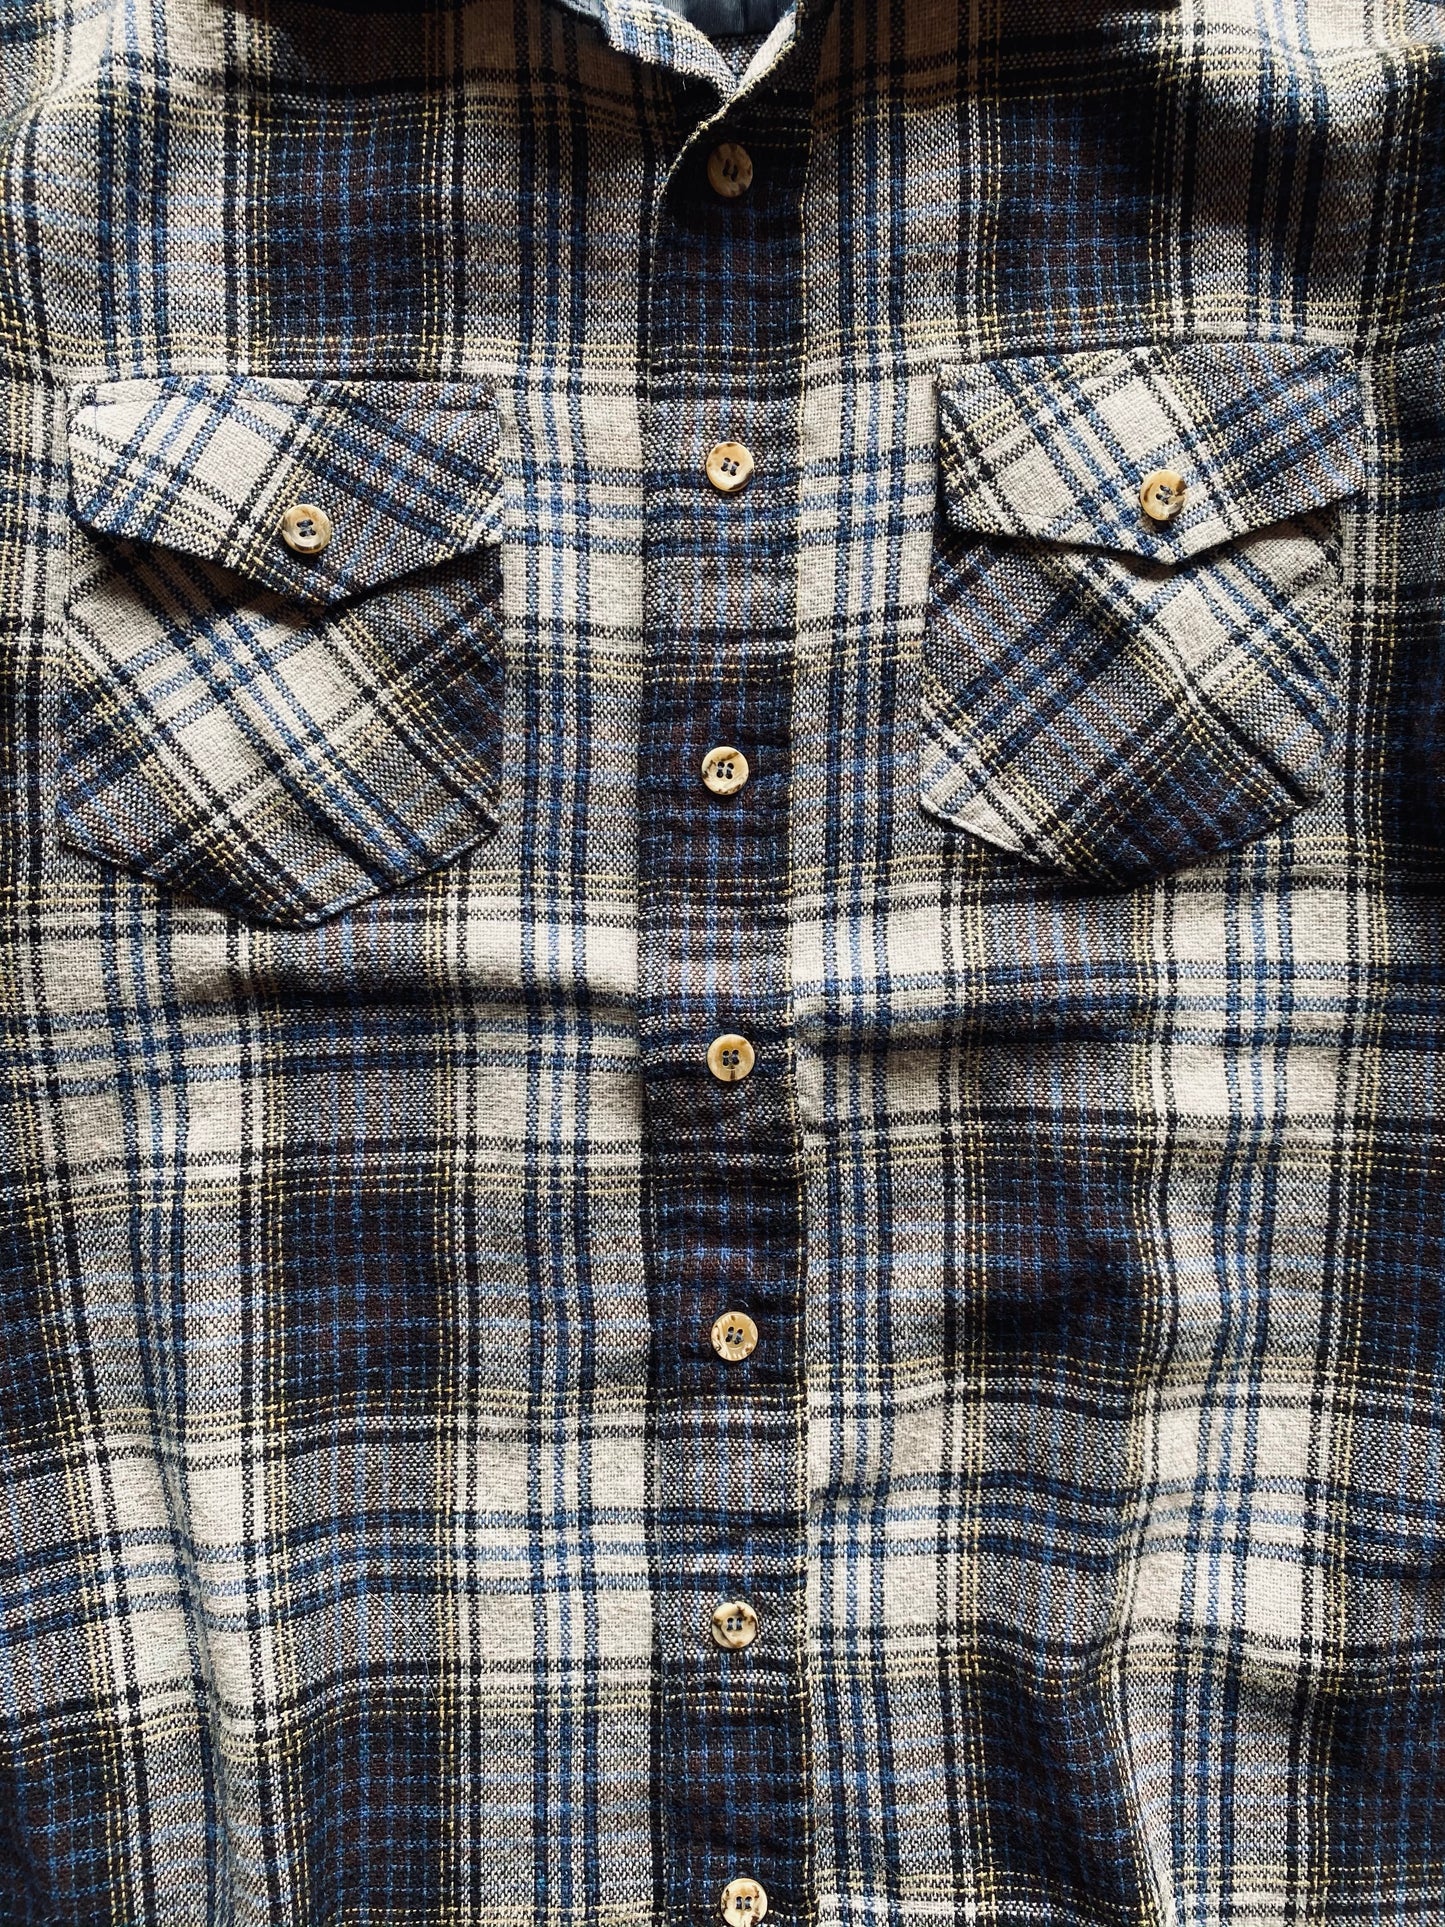 1970s Sears Flannel Work Shirt | Medium